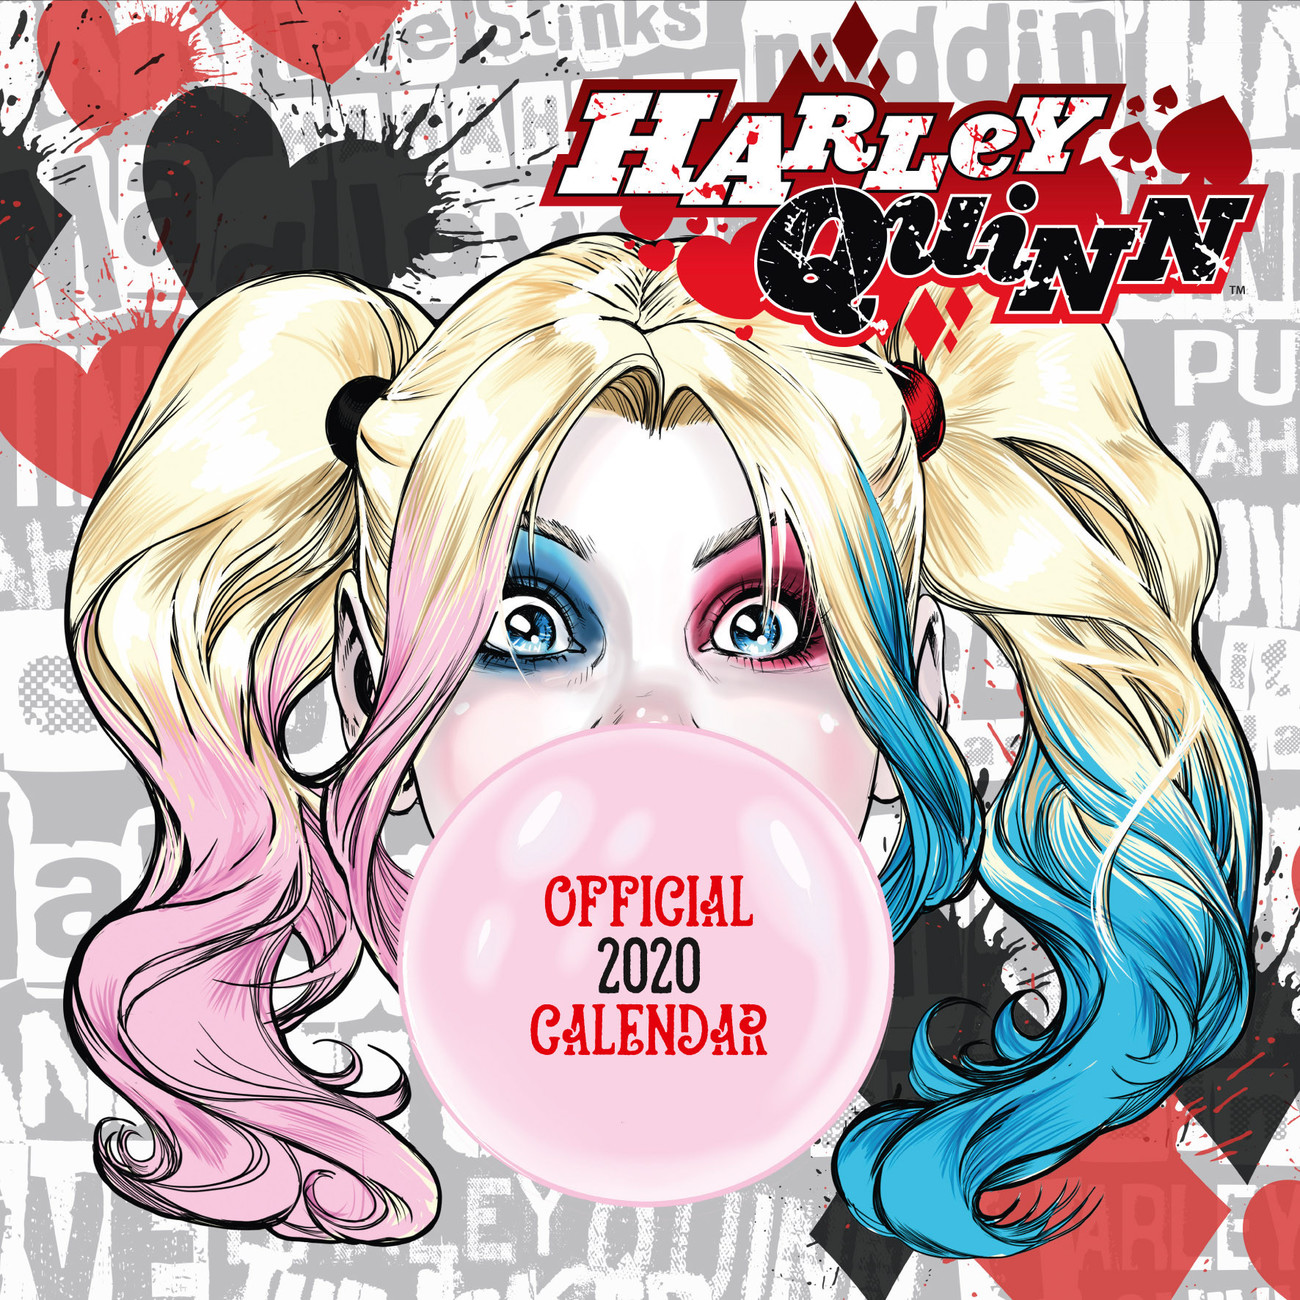 Harley Quinn Wandkalender 2020 Kaufen bei Europosters